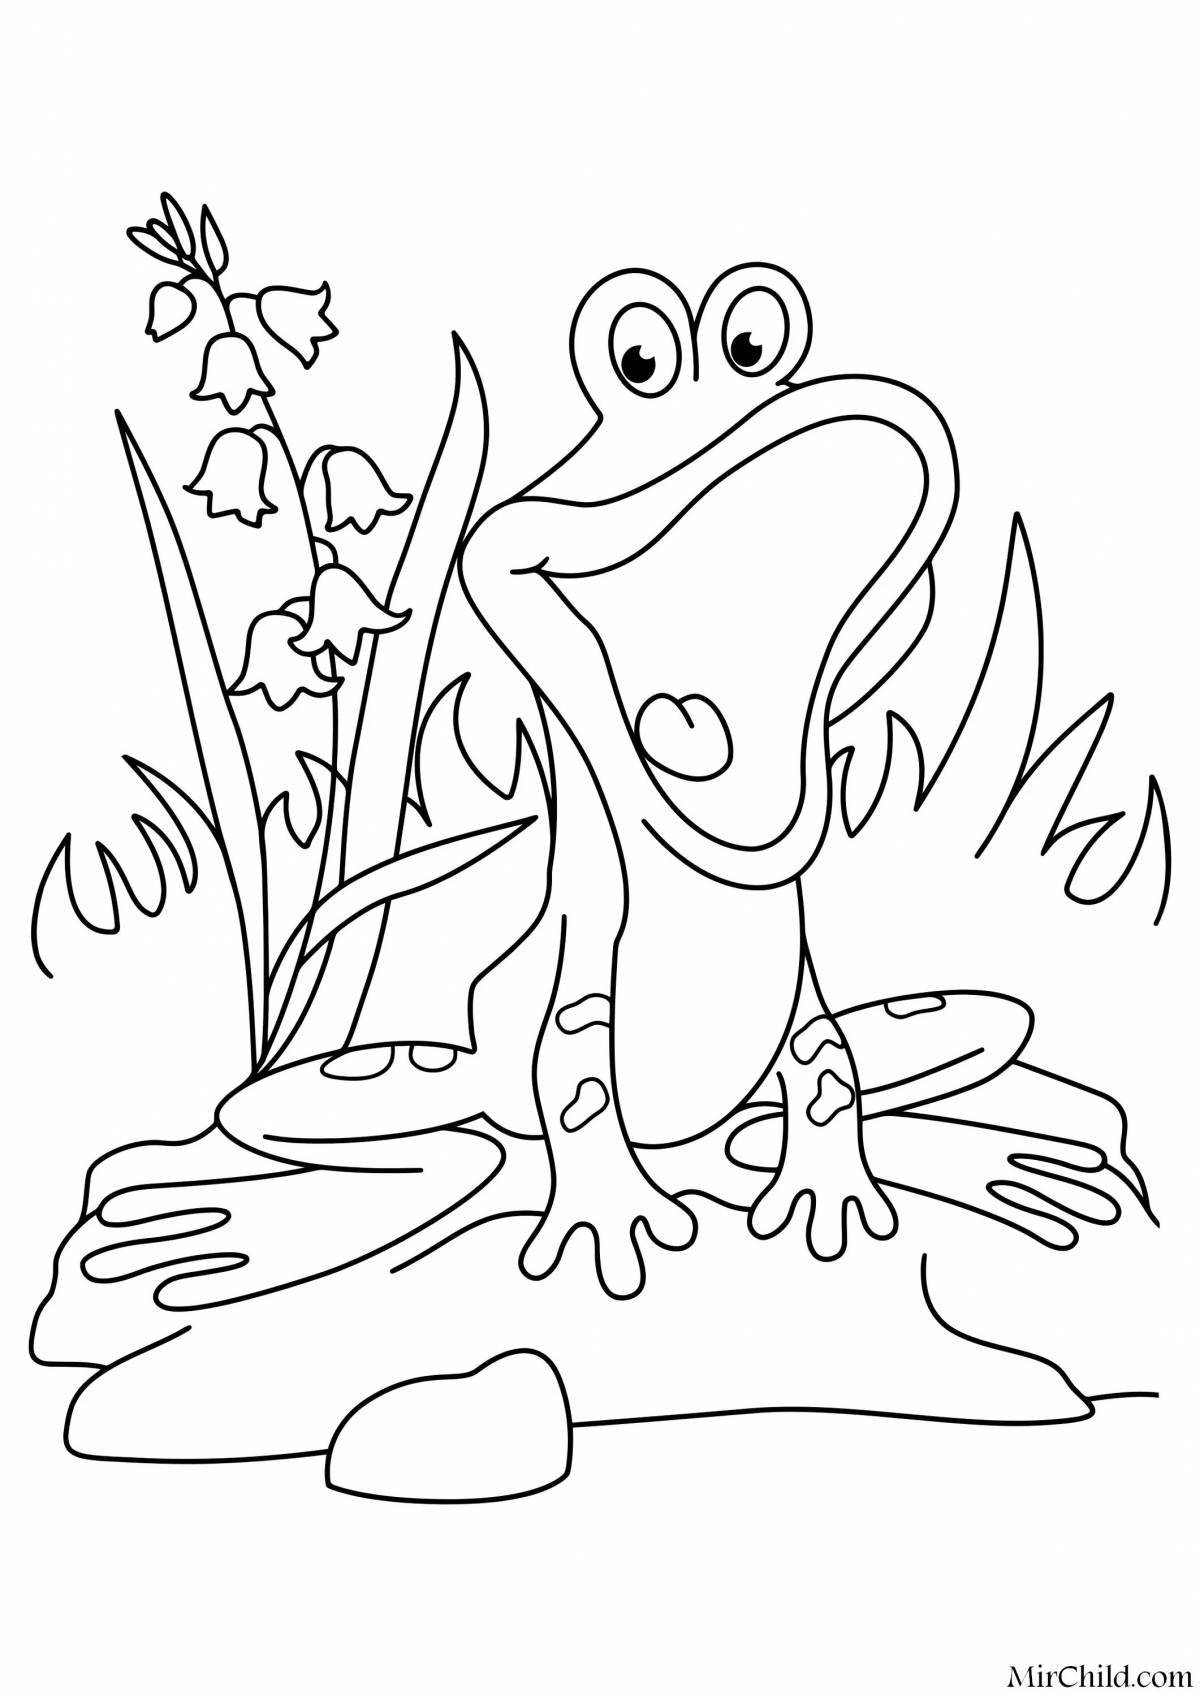 Coloring page magic frog traveler